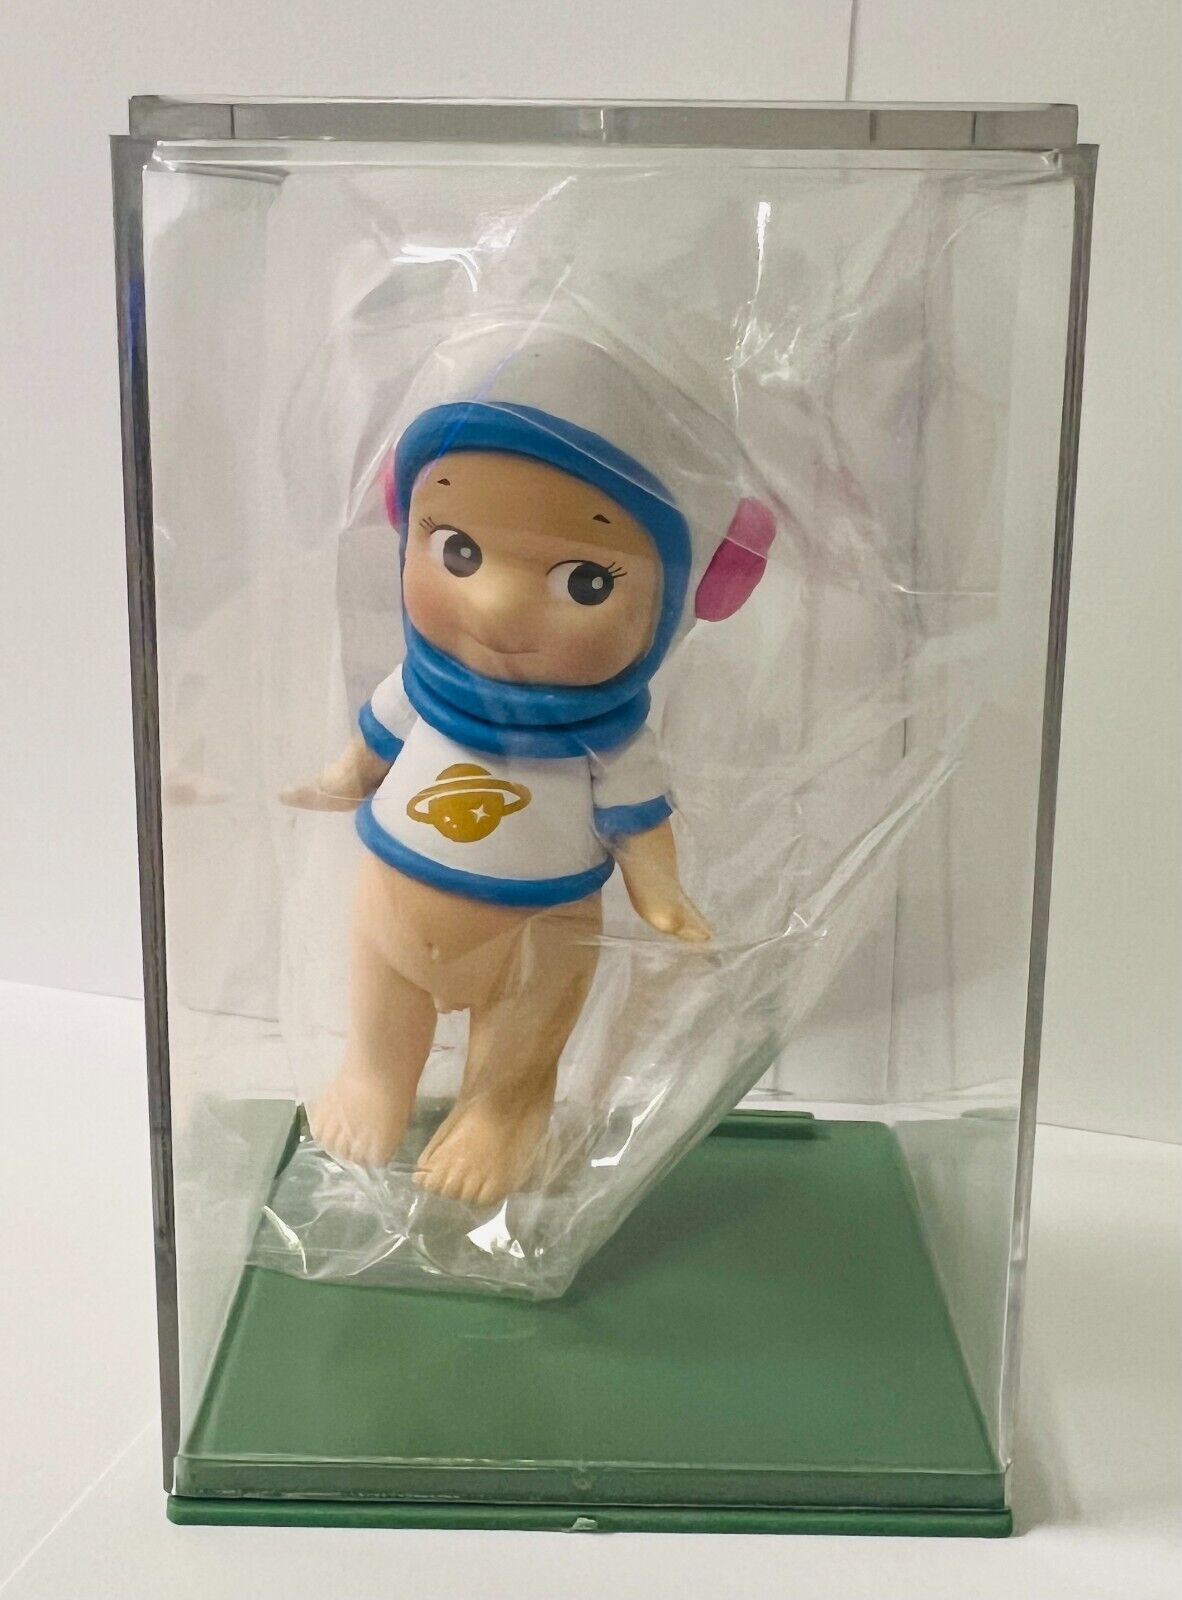 [Open Box] Sonny Angel in Space Adventure Mini Figure - Astronaut